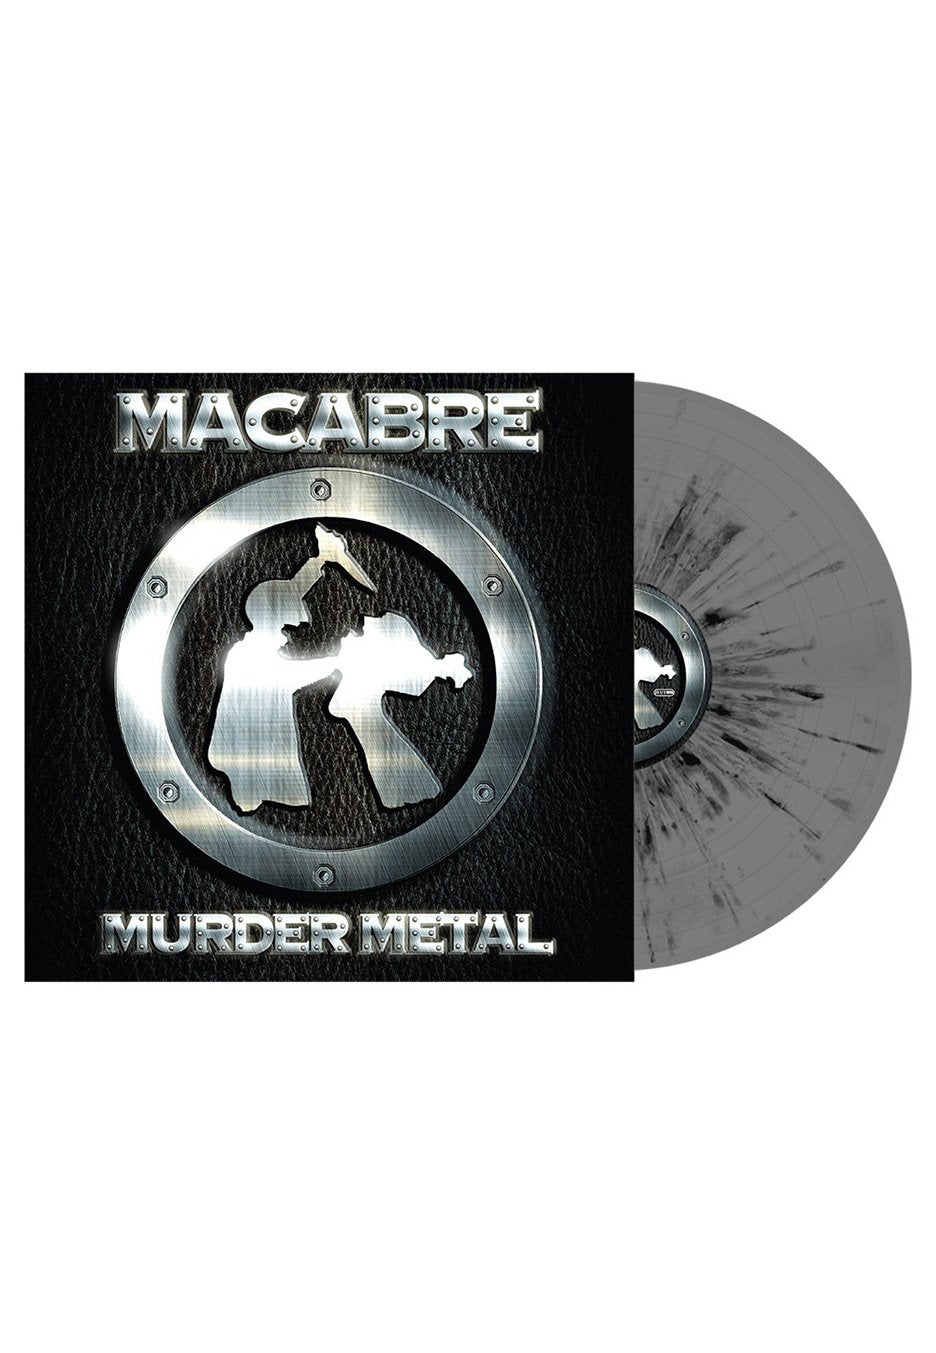 Macabre - Murder Metal (Remastered) Grey/Black - Splattered Vinyl